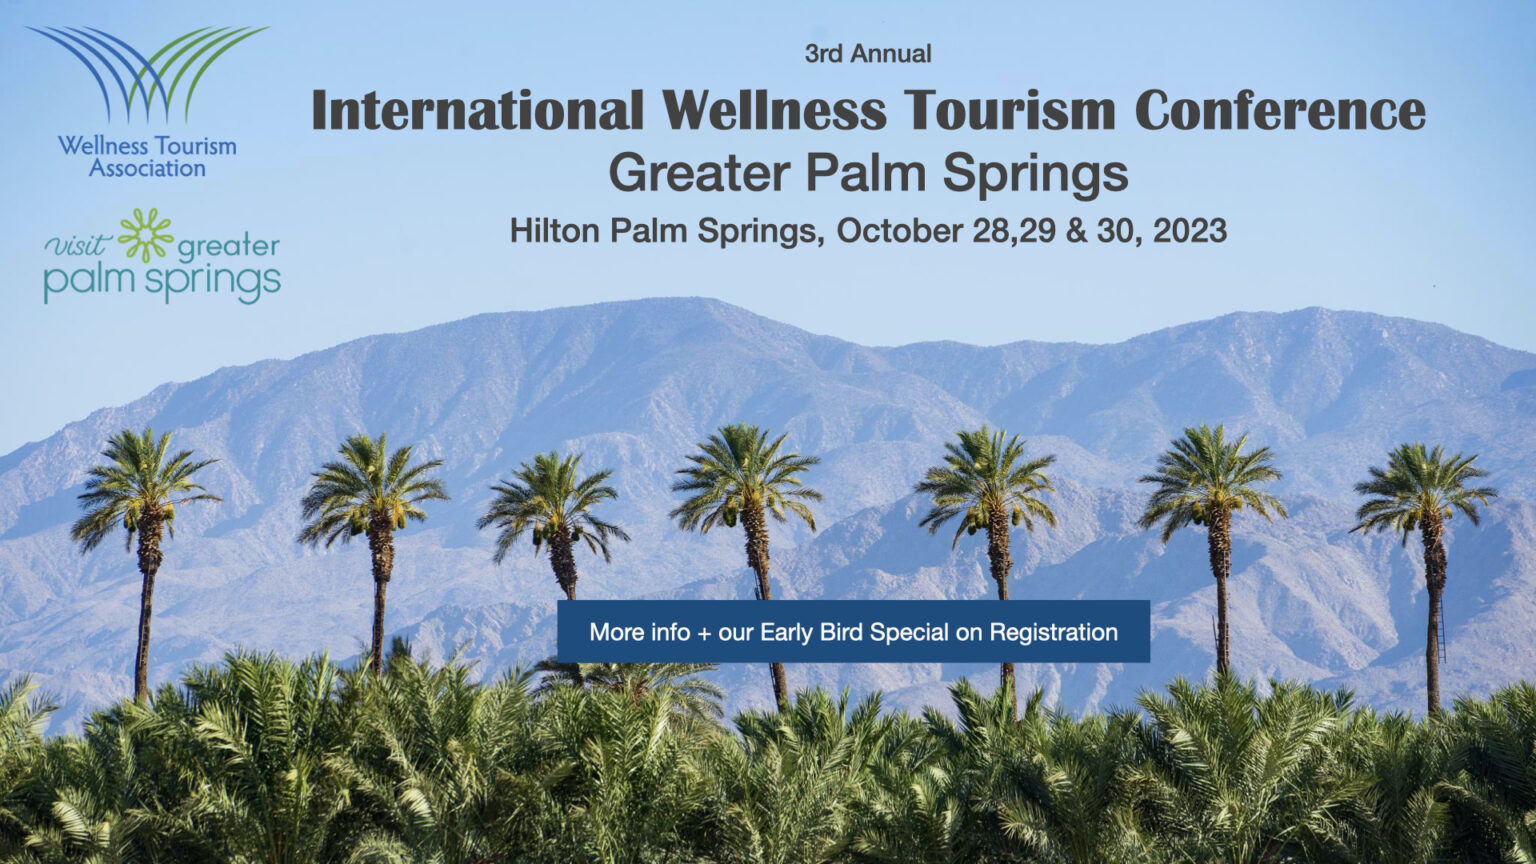 International wellness tourism conference